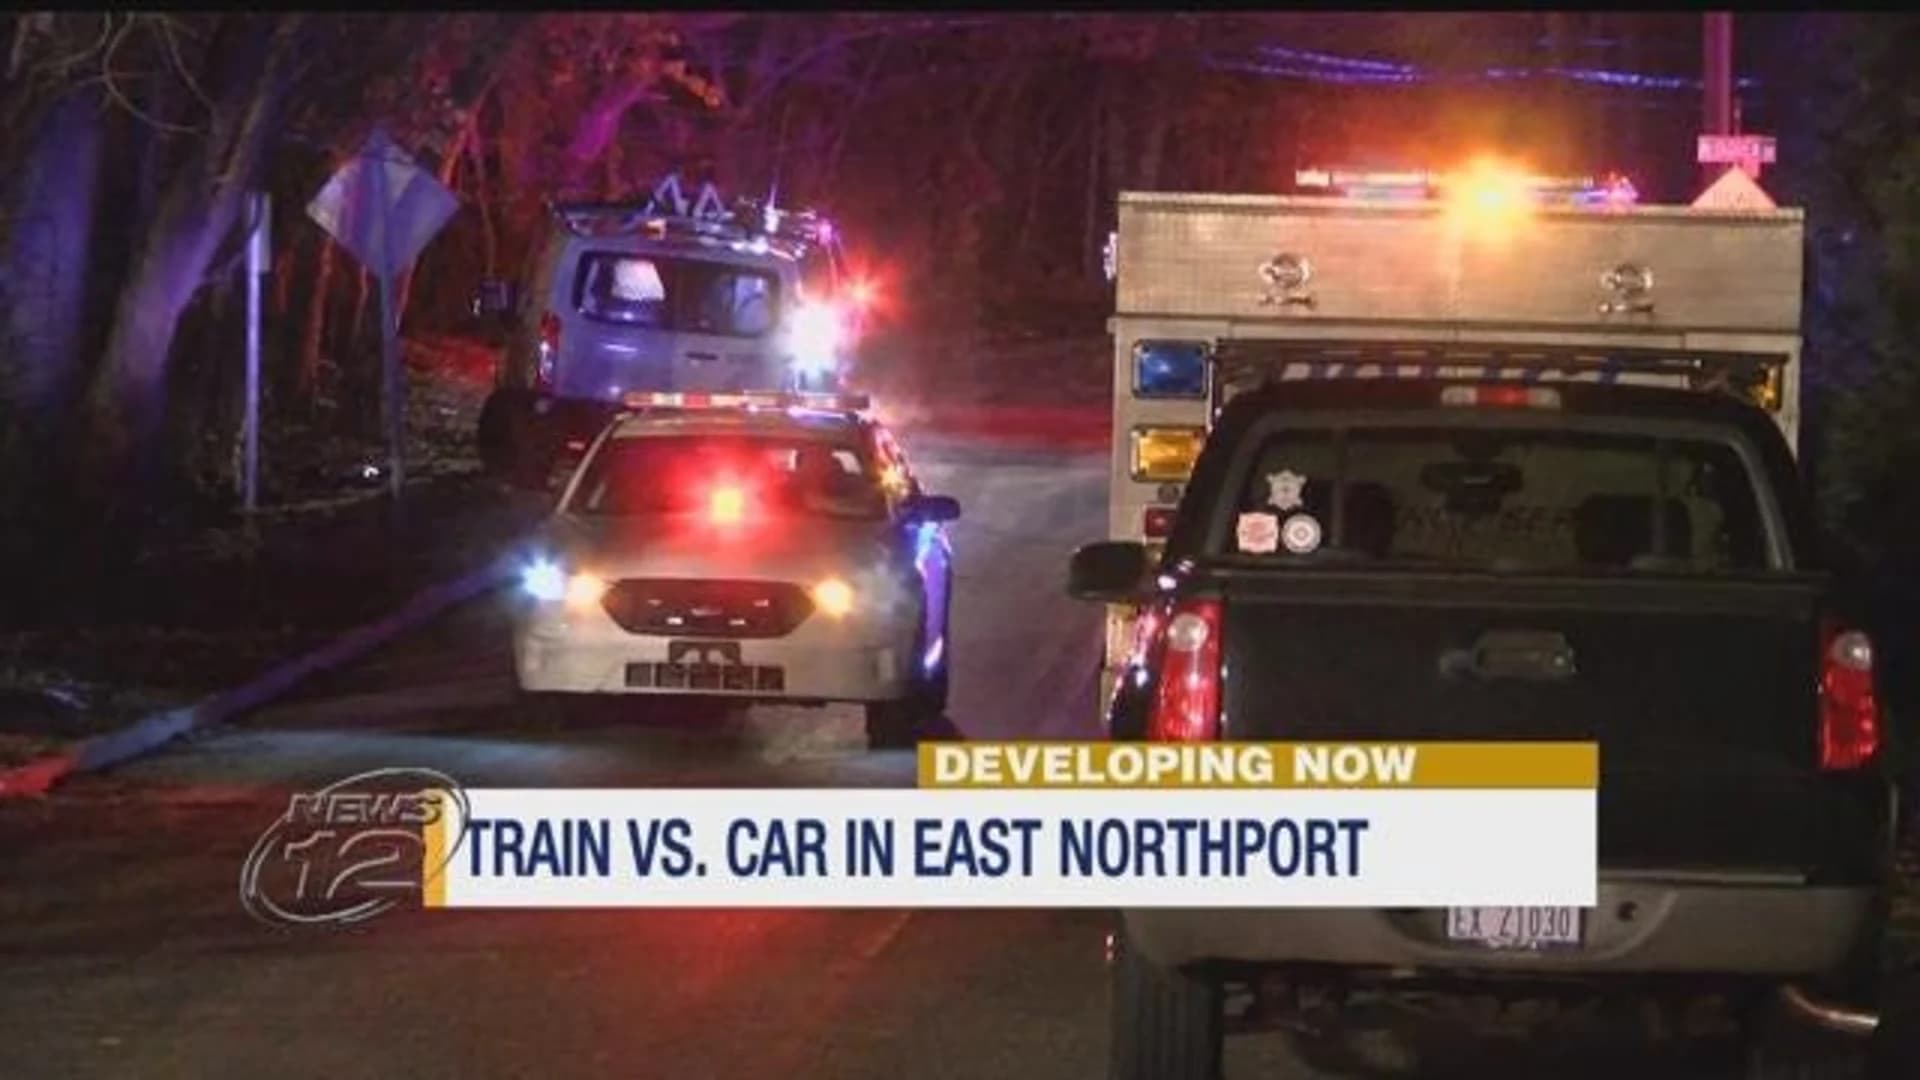 MTA: Train strikes car, killing 1